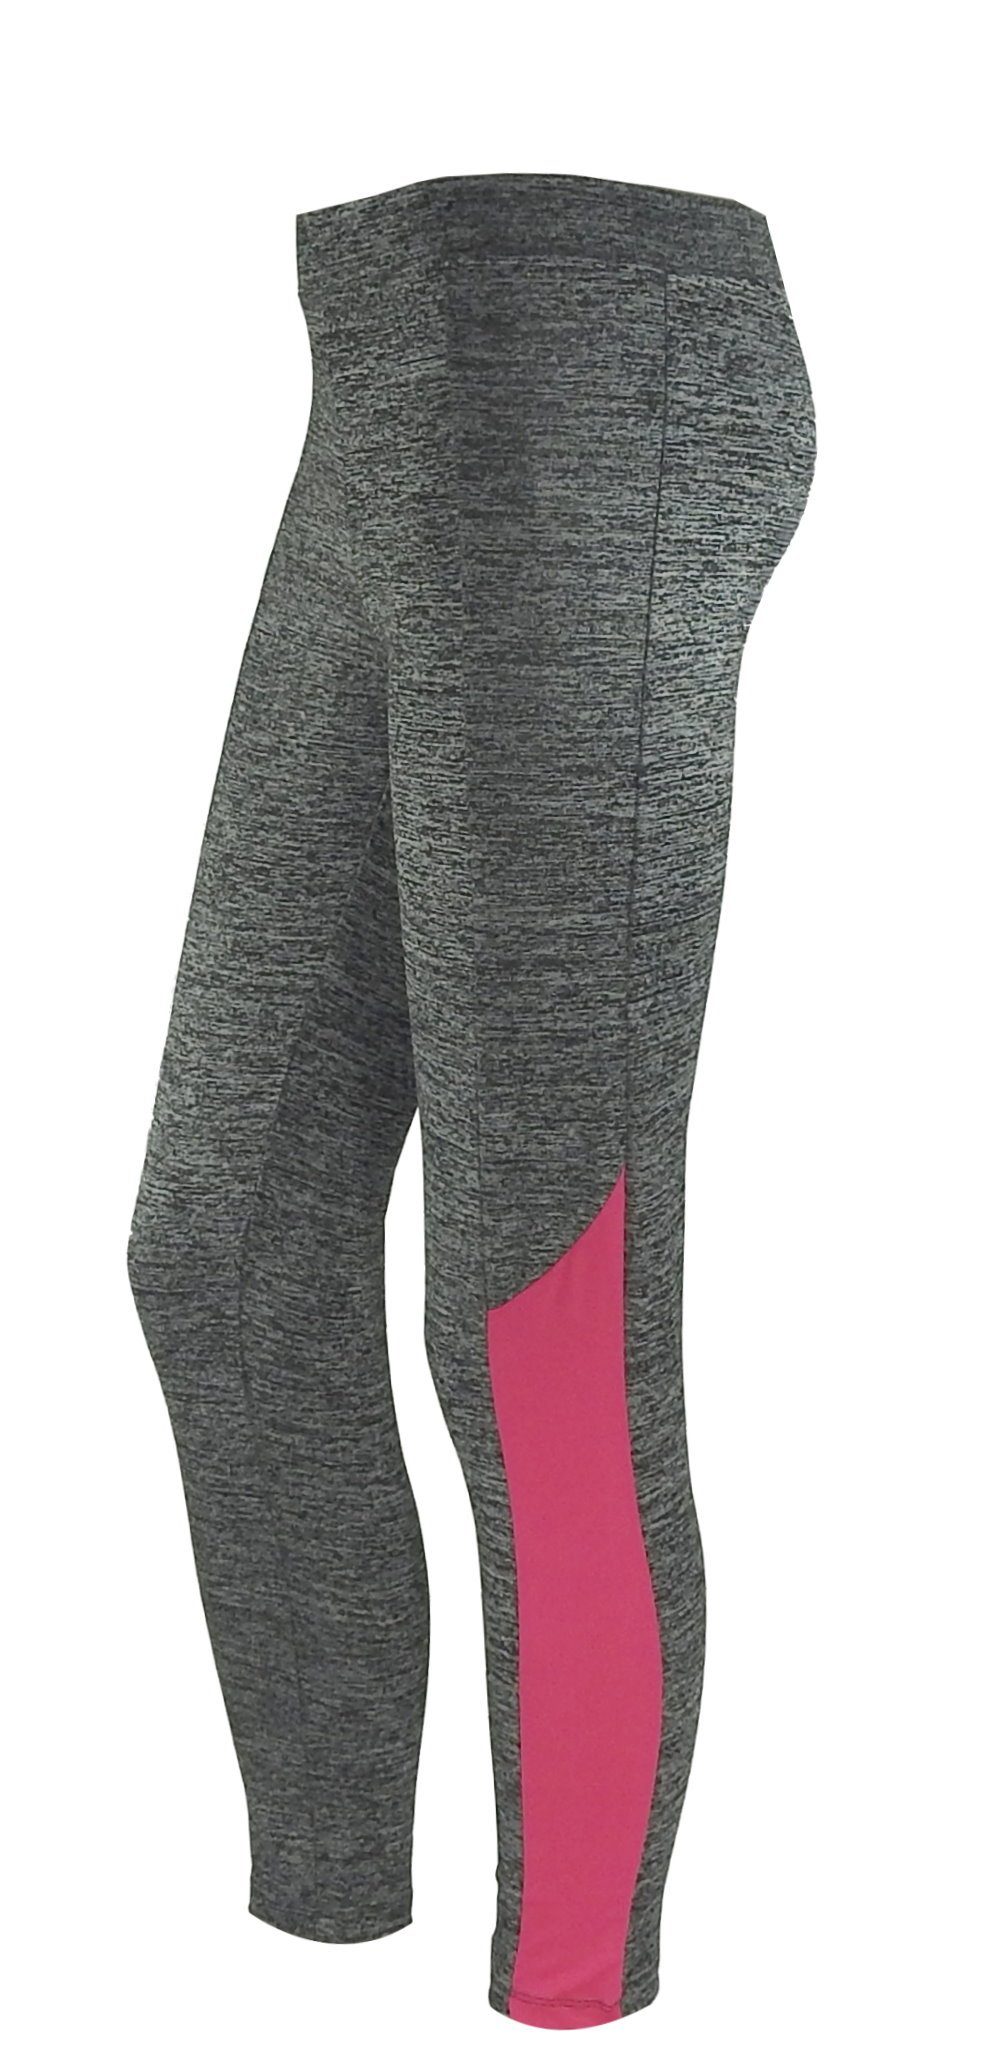 dynamic24 Leggings Damen Yoga Fitness Leggins Hosen grau Jogging Trainingshose Sporthose